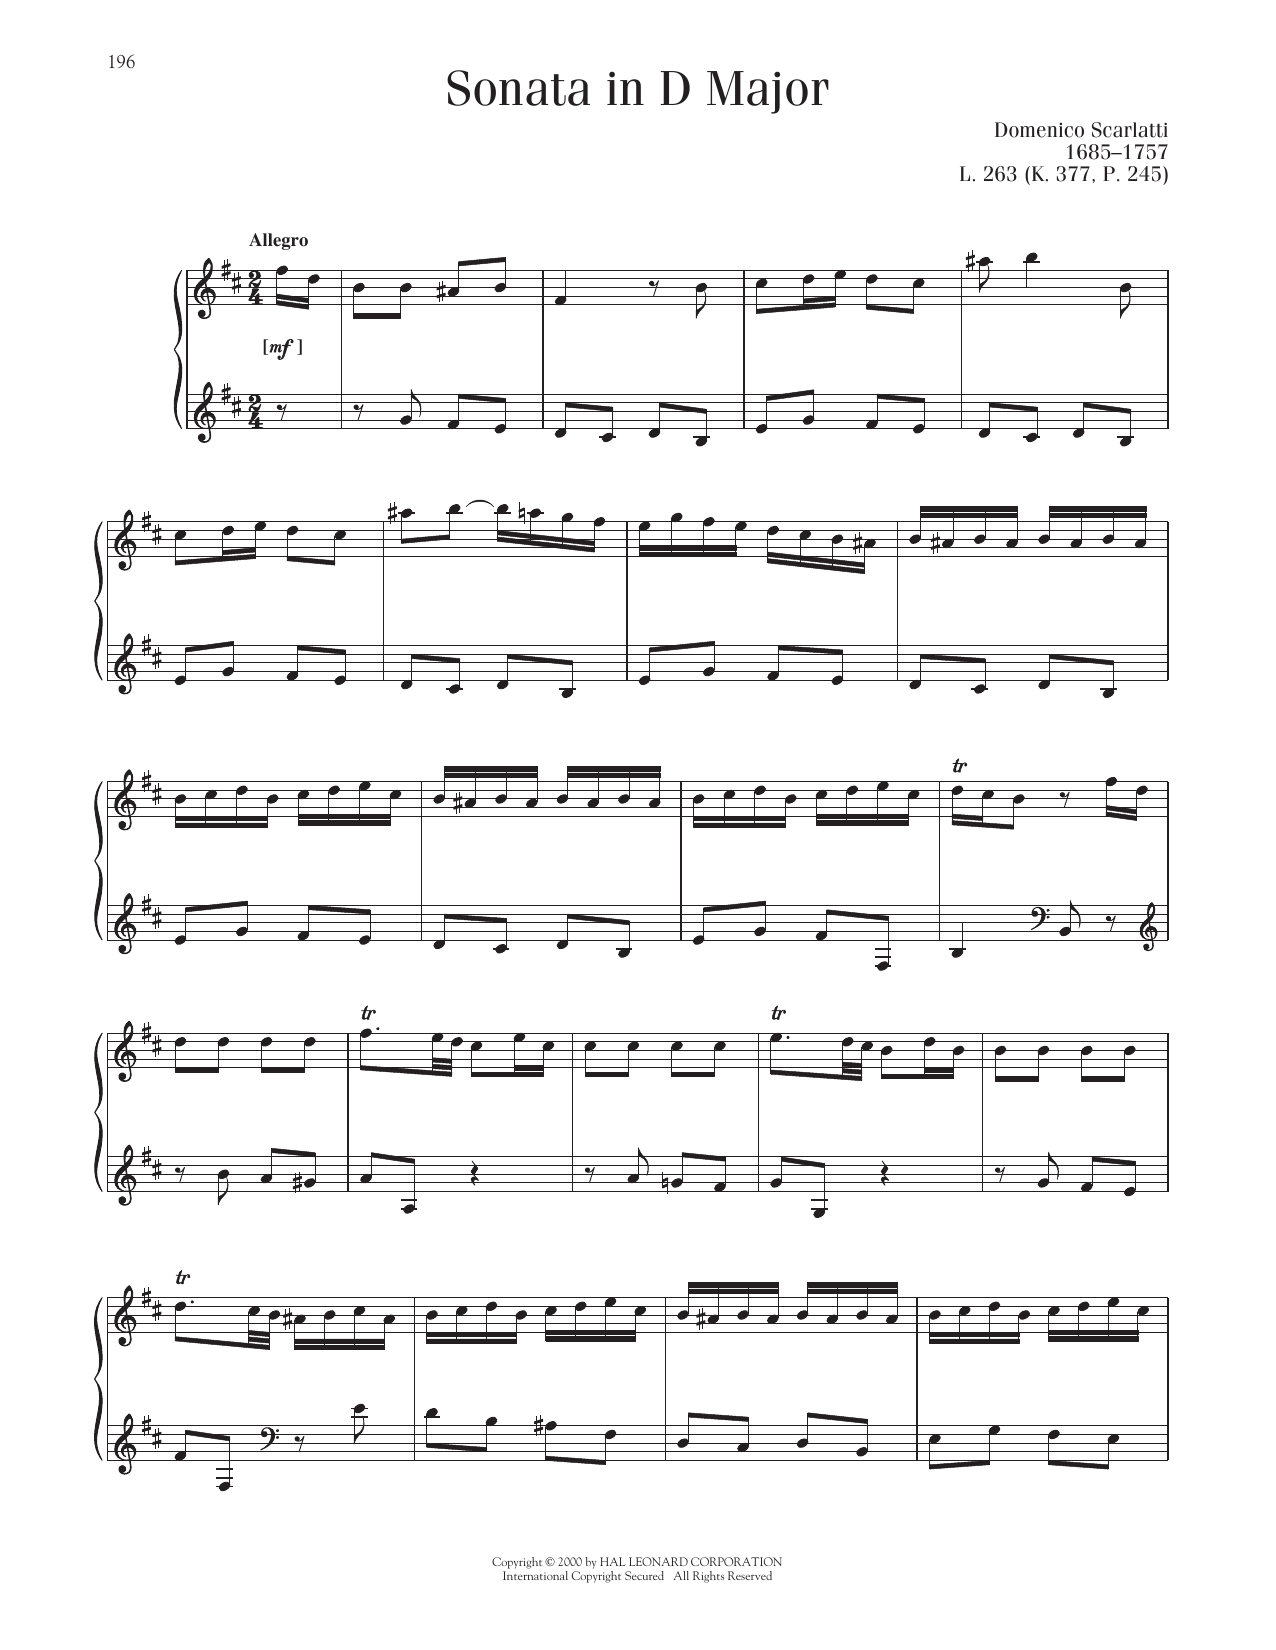 Domenico Scarlatti Sonata In D Major, K. 377 sheet music notes printable PDF score